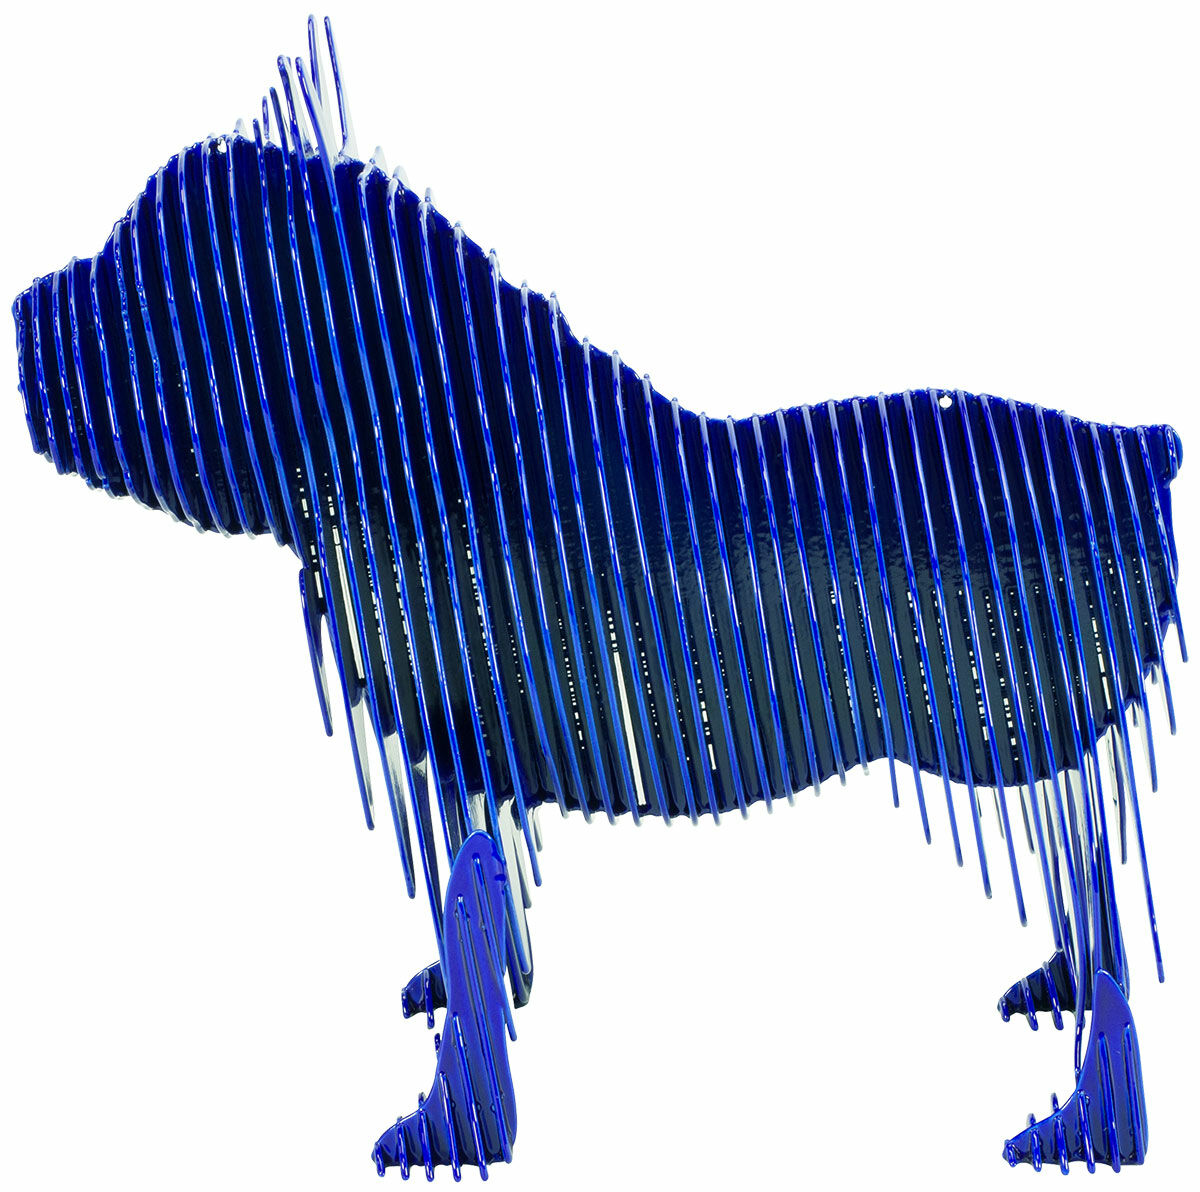 Steel sculpture "Bulldog", blue version